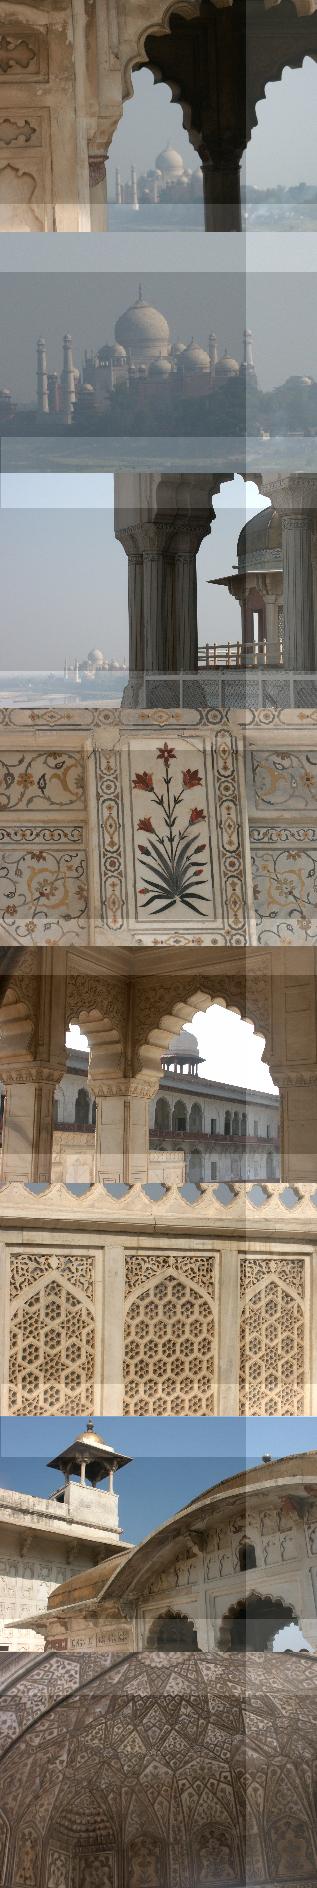 Palacio de Agra